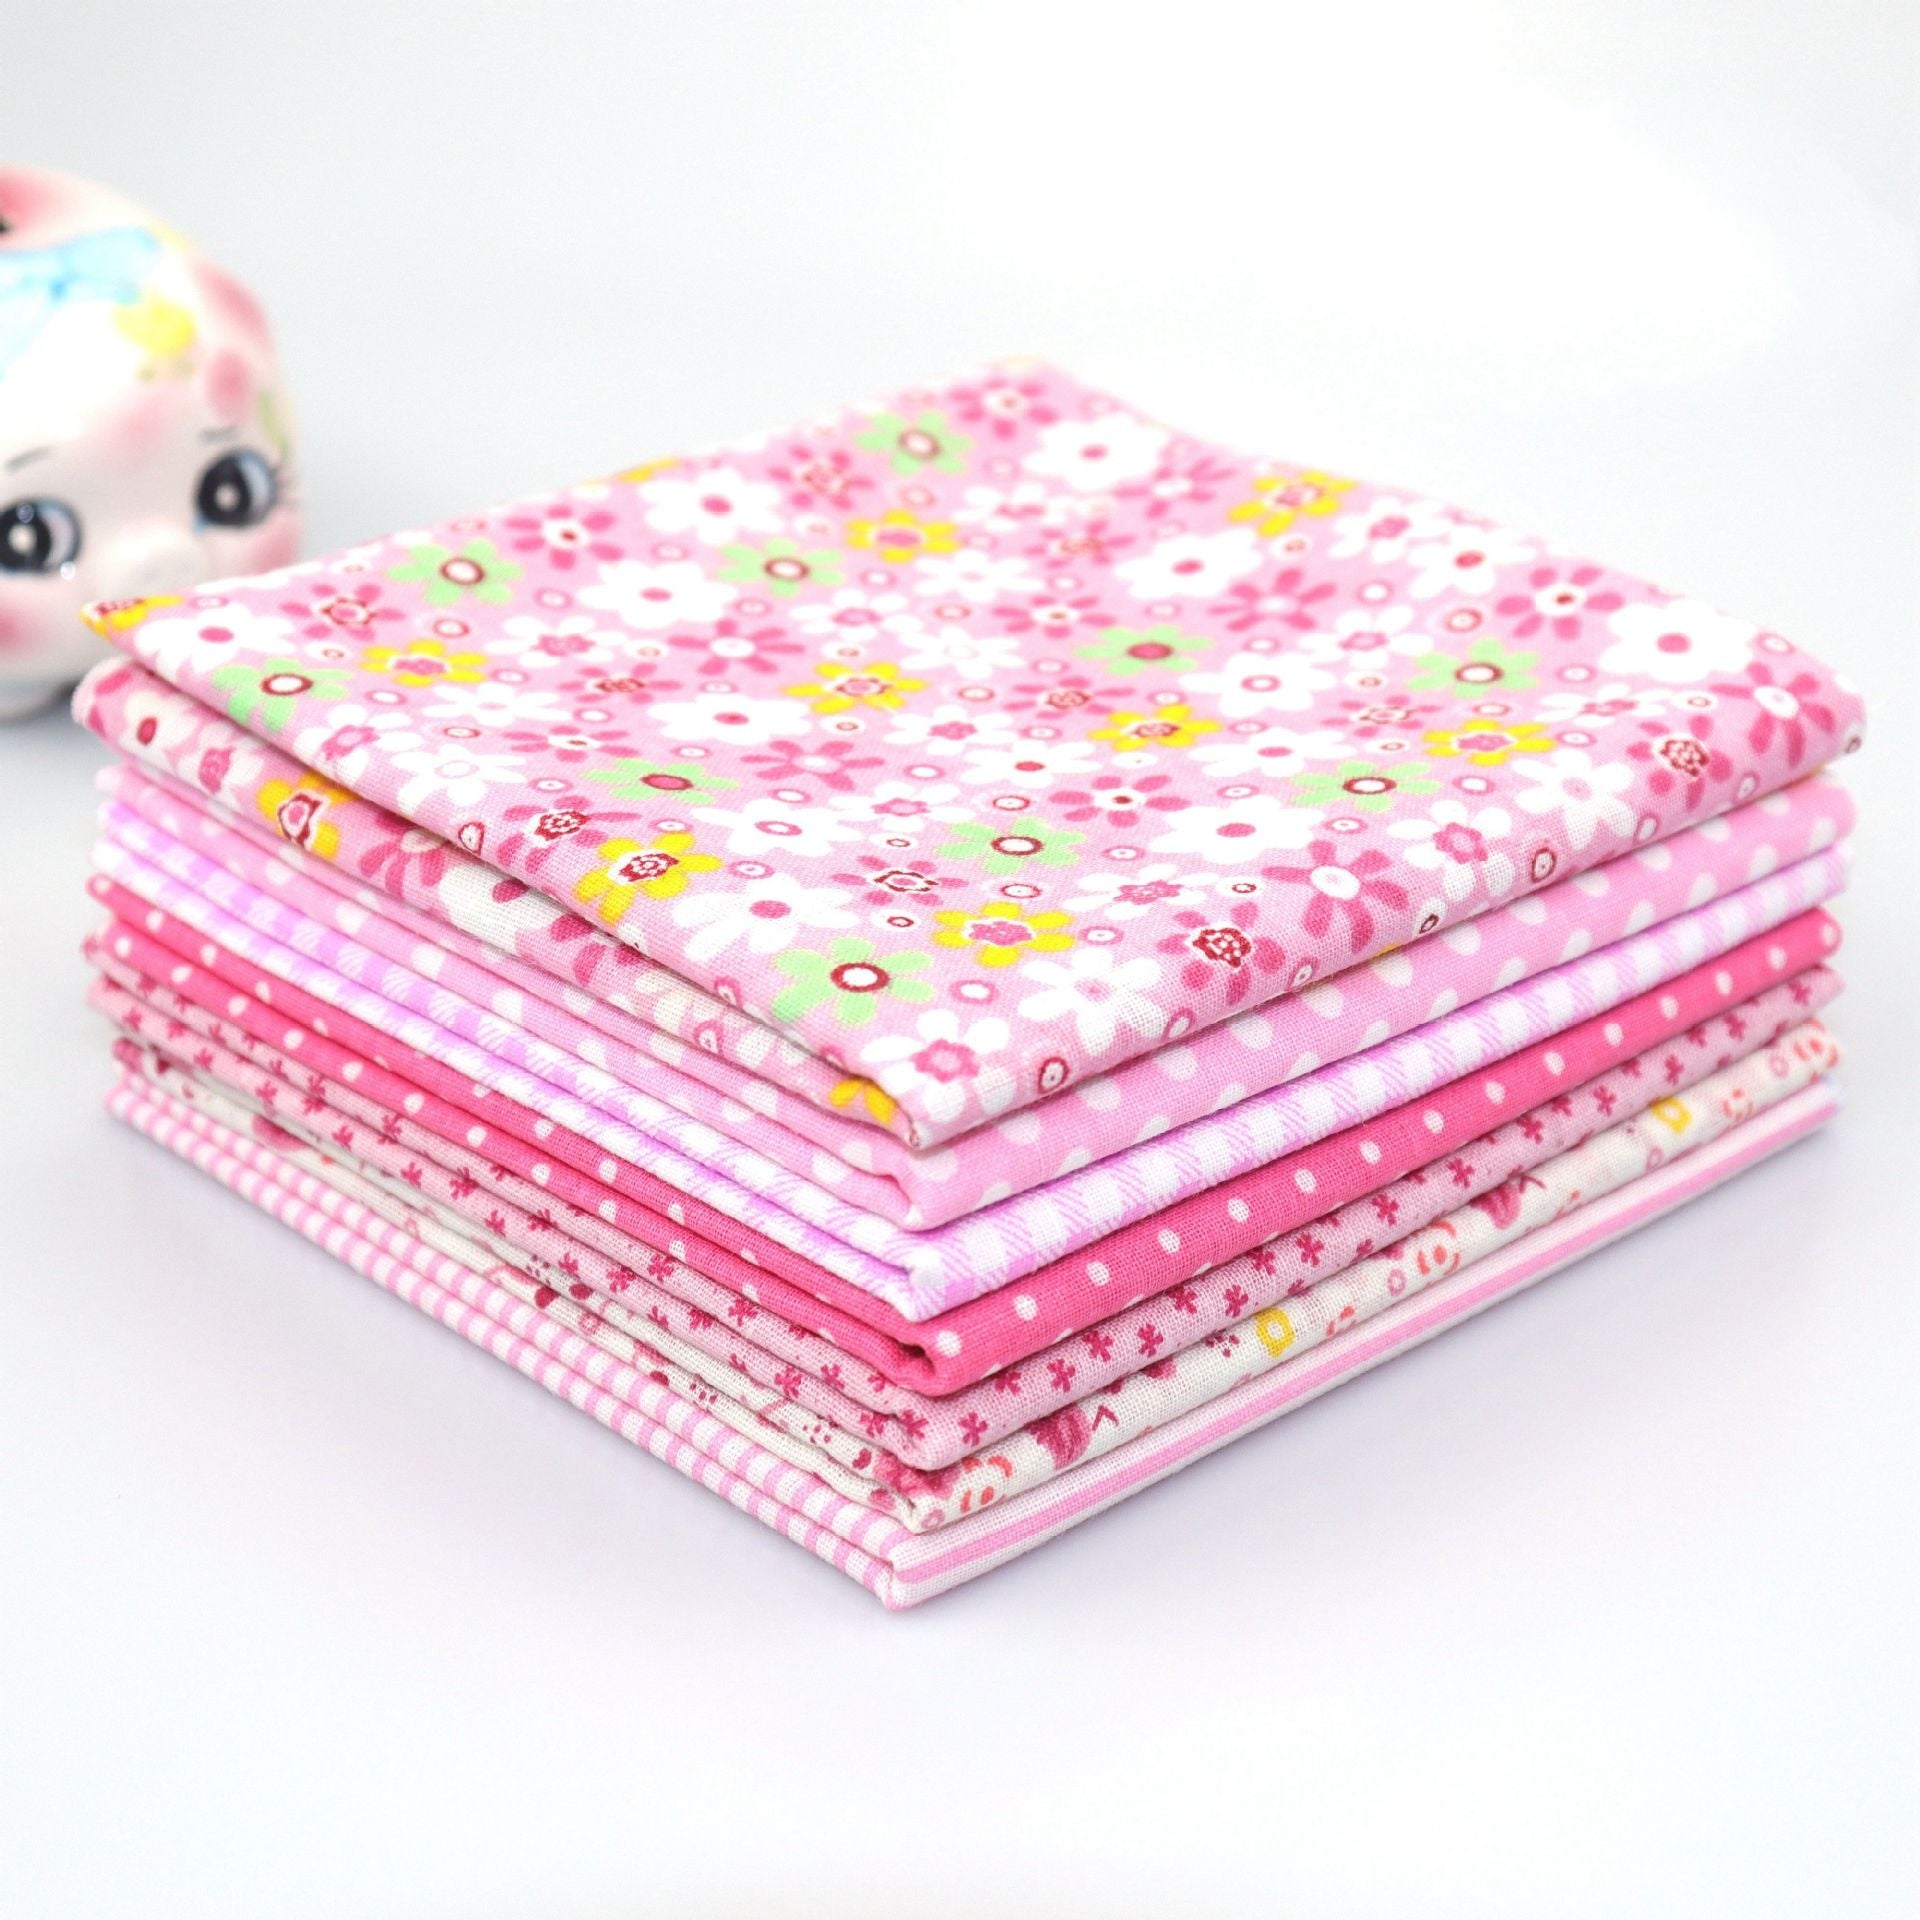 MajorCrafts 7pcs of 50cm x 50cm Mixed Pink Theme Cotton Fabric Patchwork Squares